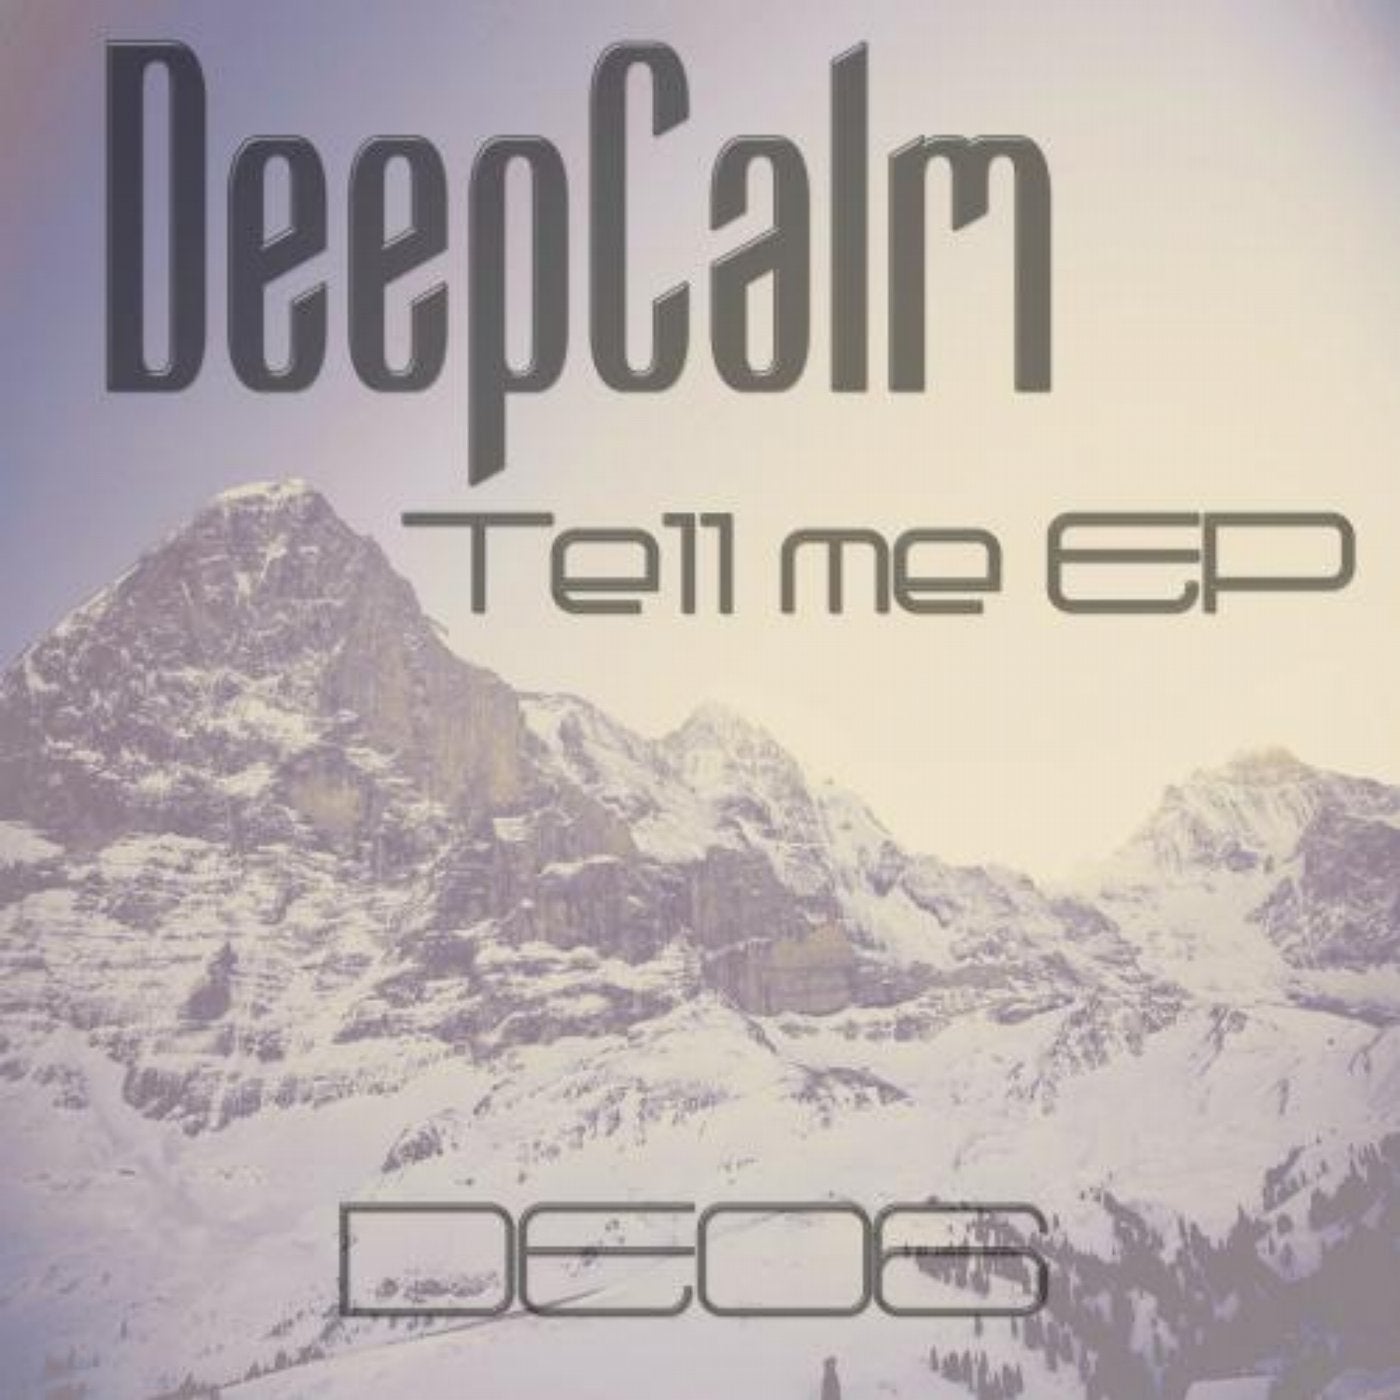 Tell Me EP